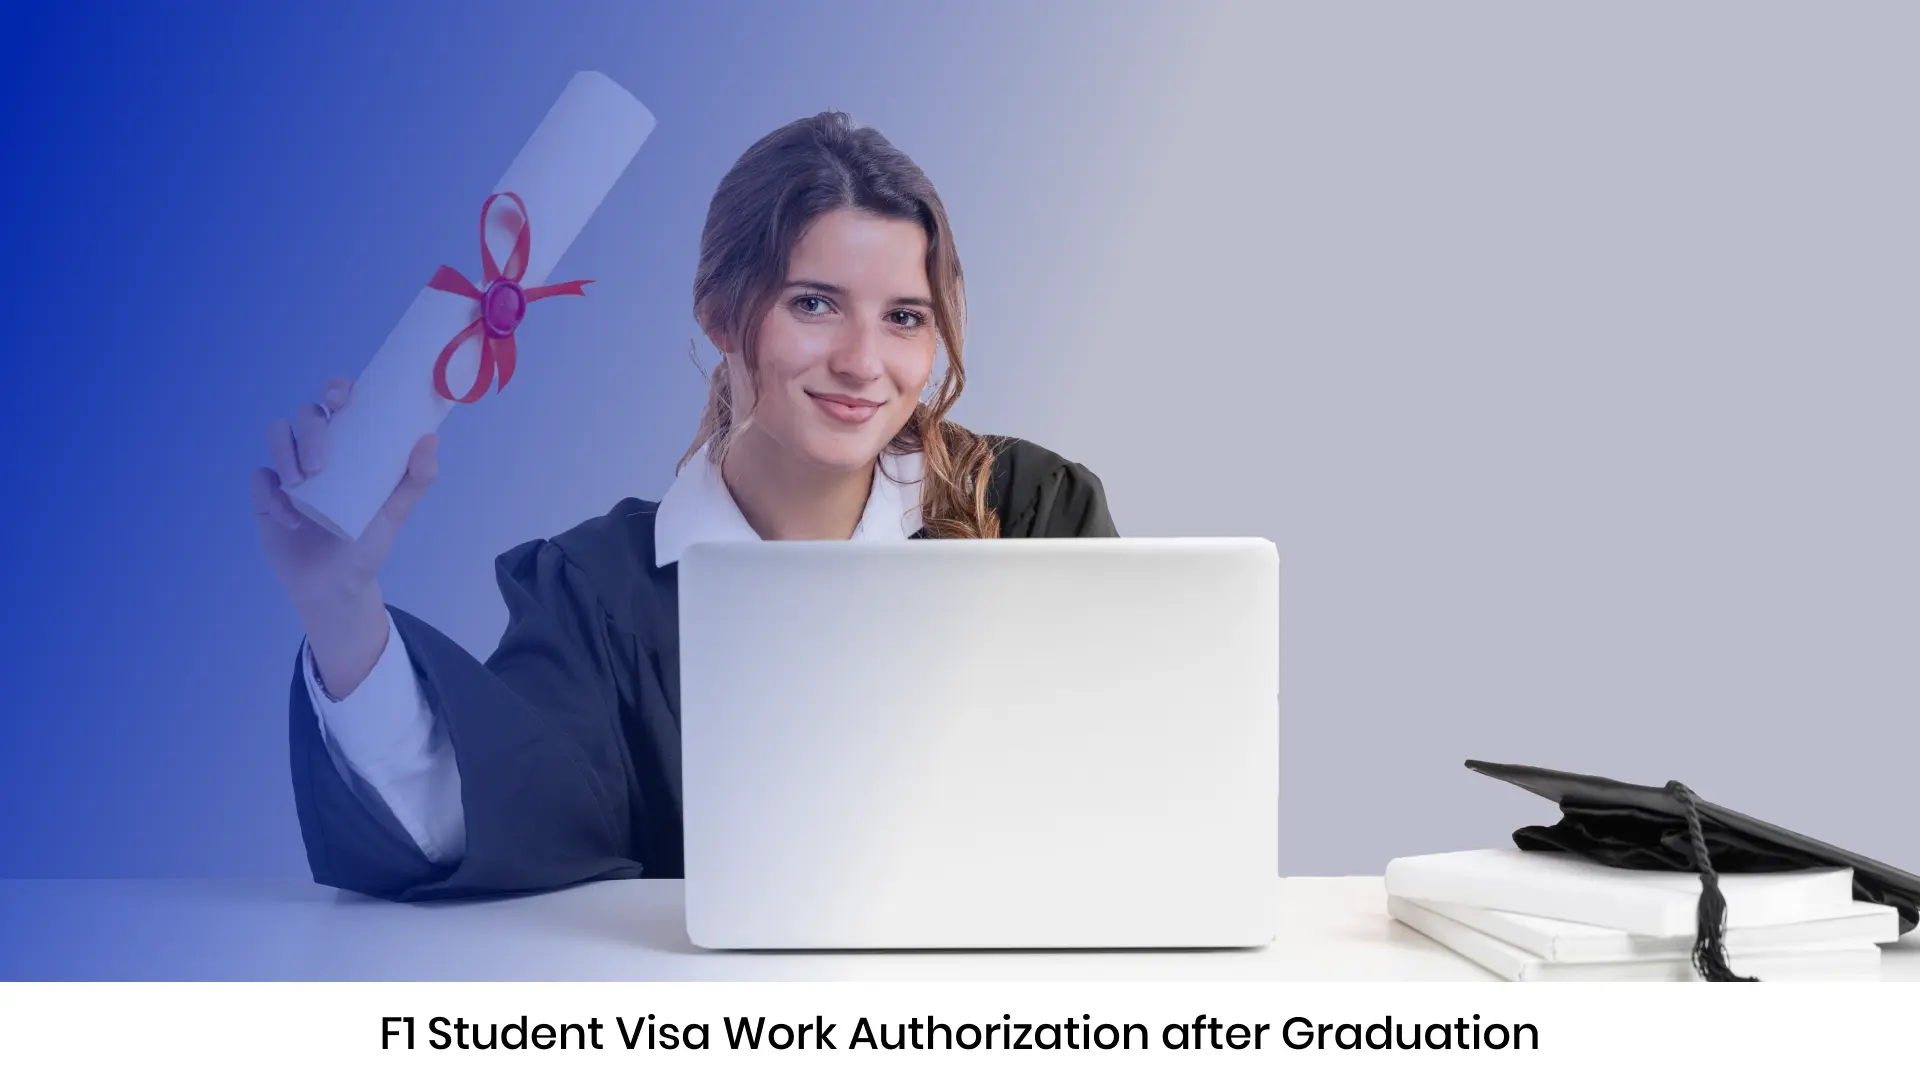 F1 Student Visa Work Authorization after Graduation